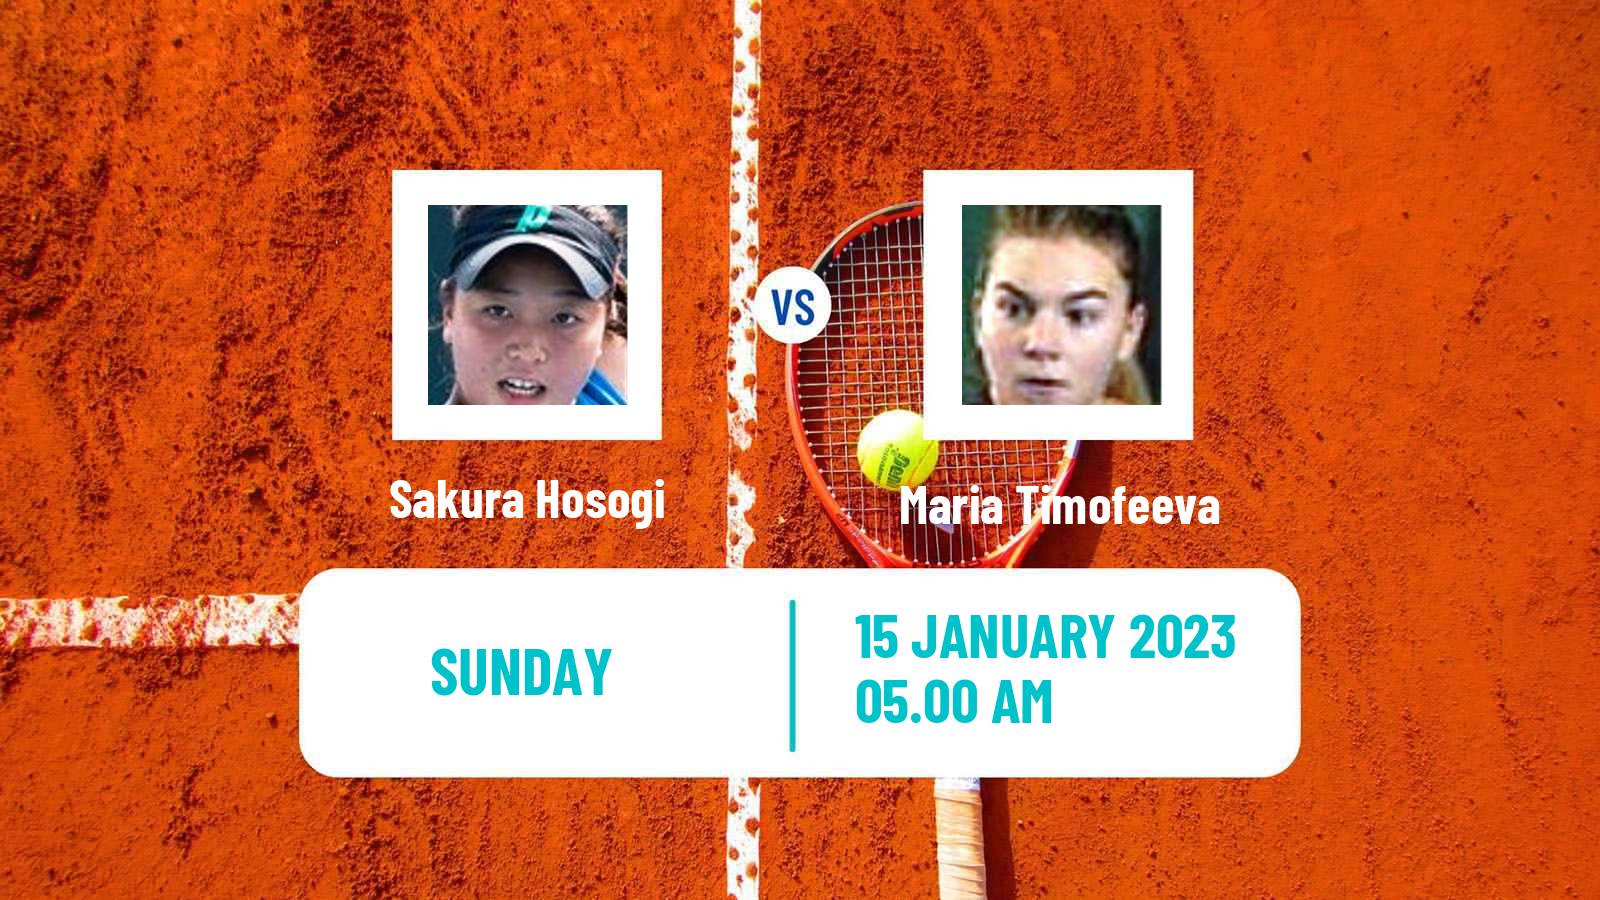 Tennis ITF Tournaments Sakura Hosogi - Maria Timofeeva